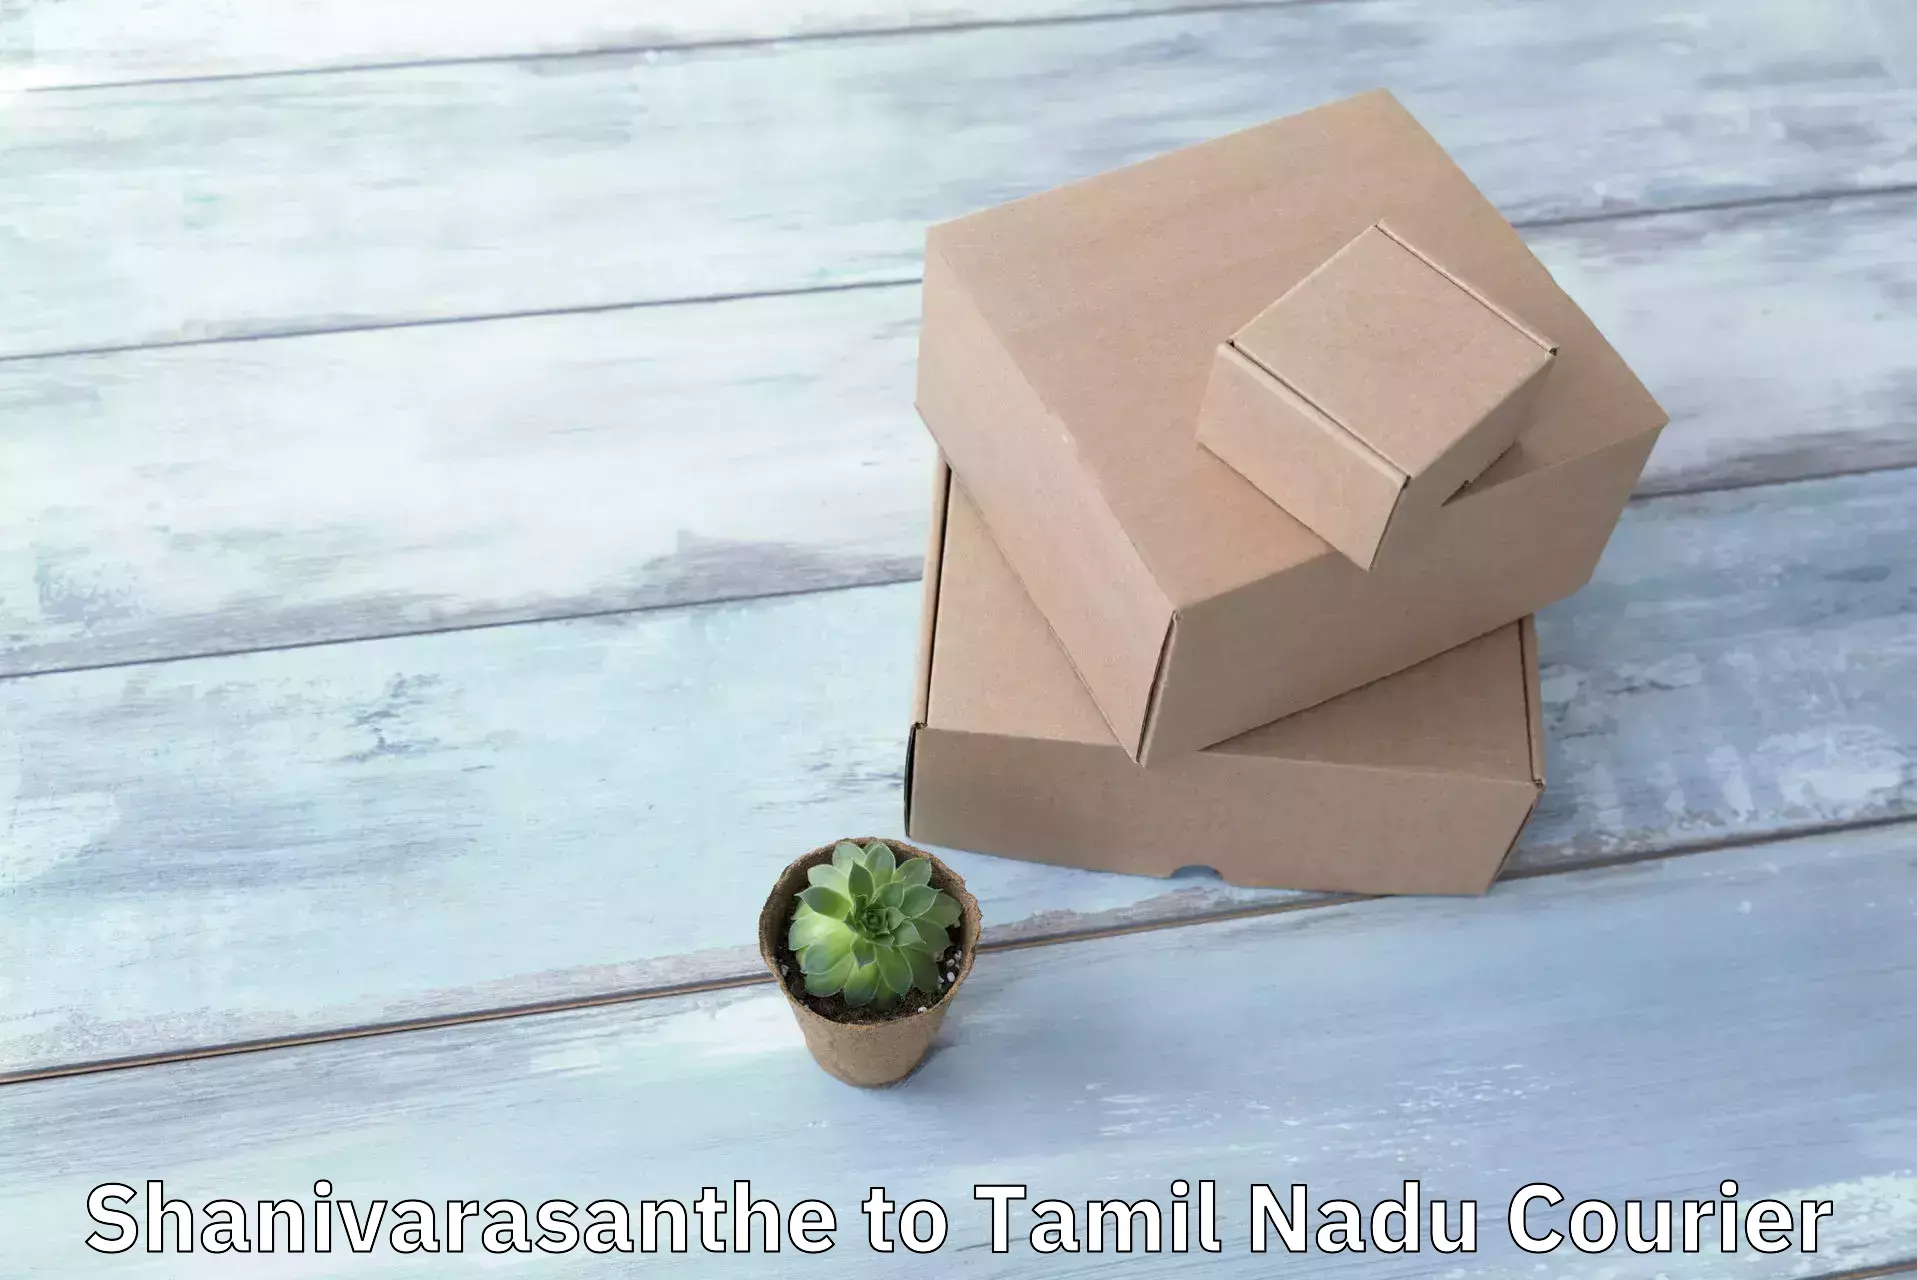 Multi-modal transportation Shanivarasanthe to Tamil Nadu